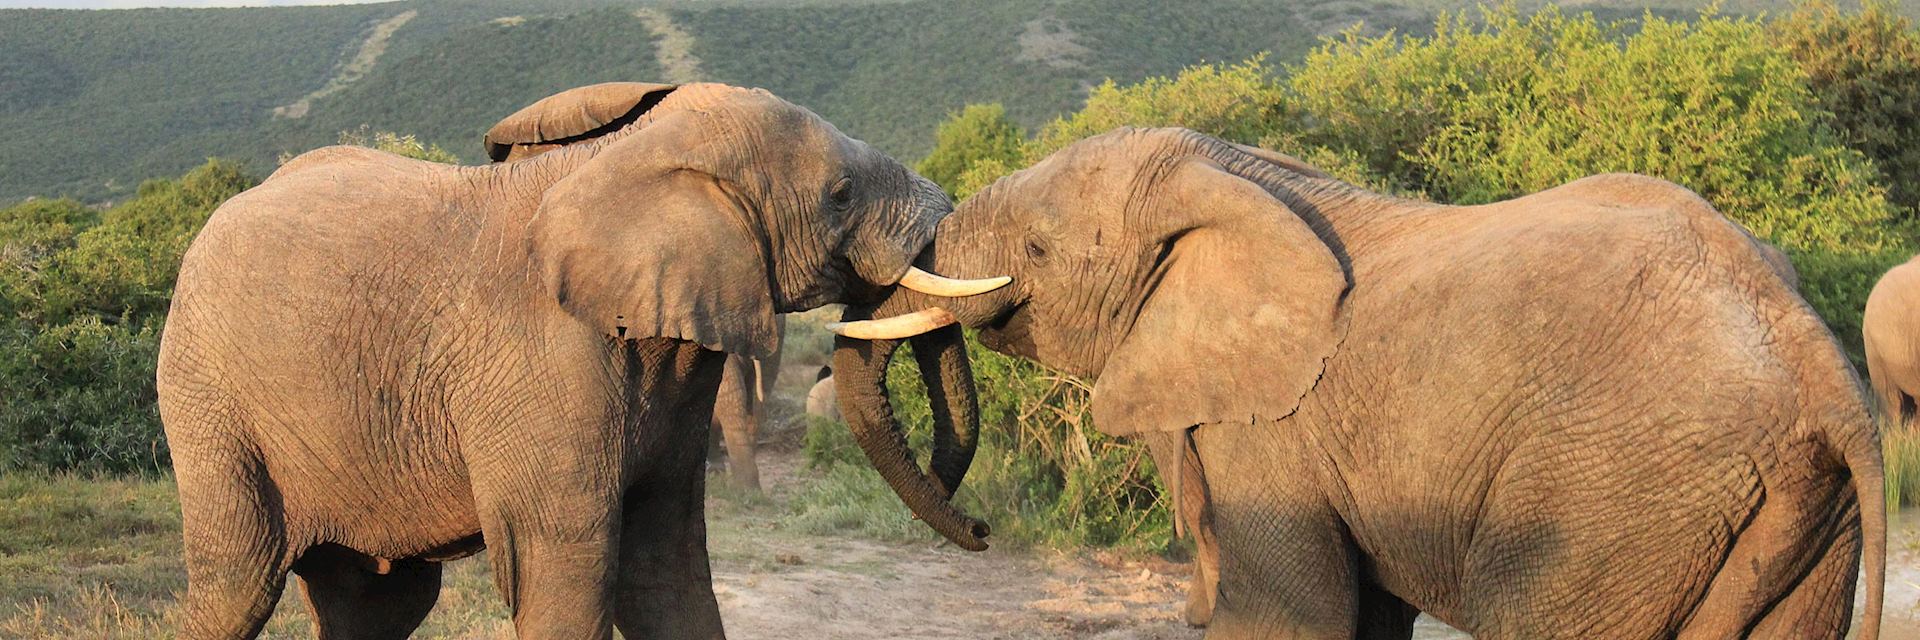 Elephants in Shamwari Private Game Reserve